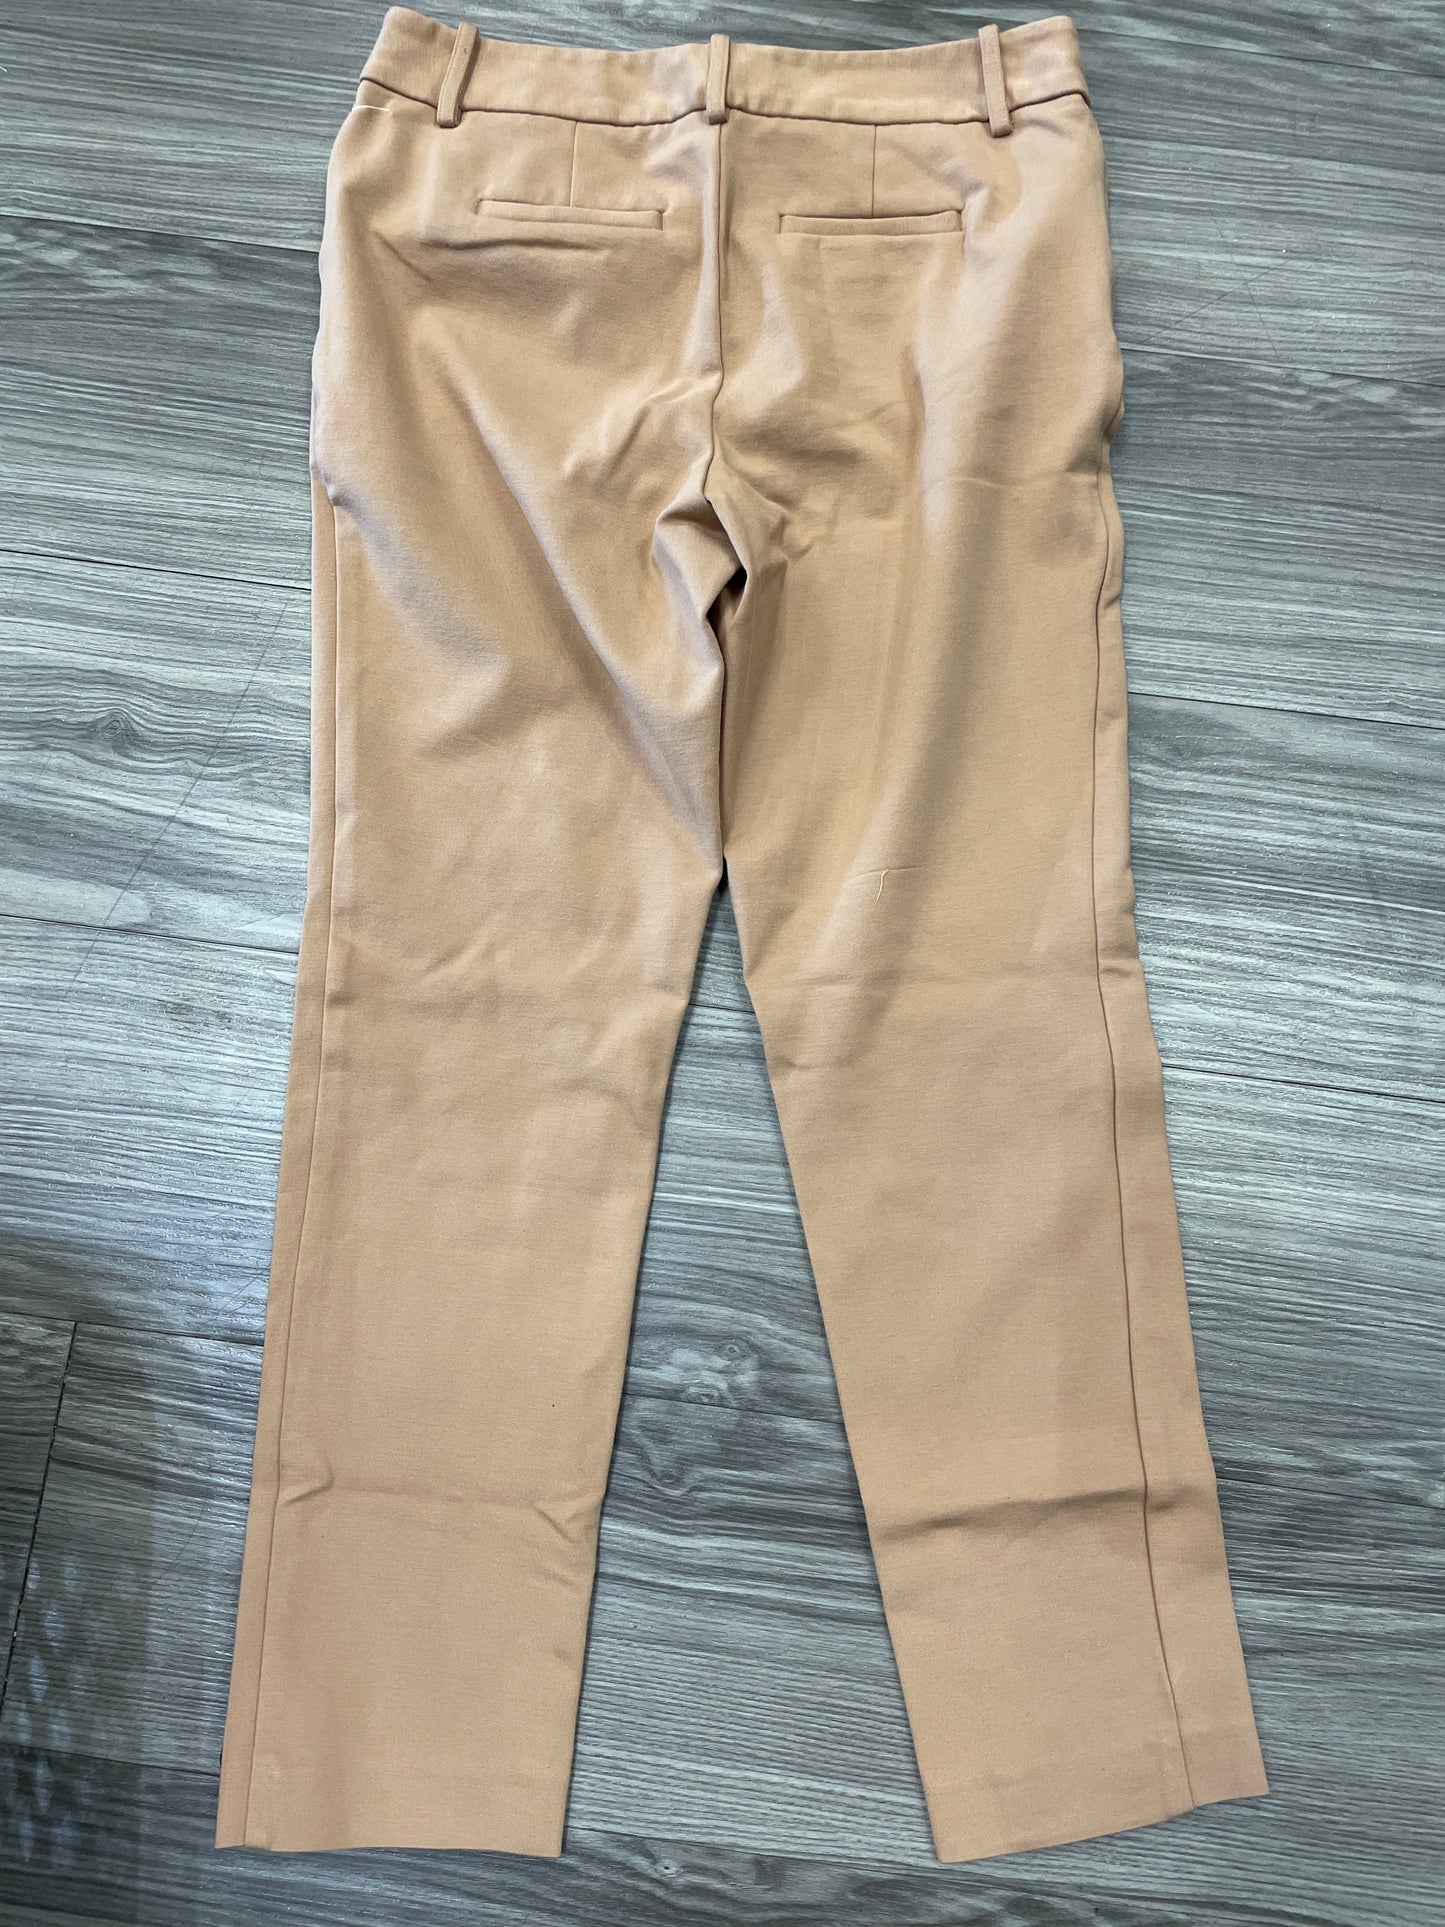 Pants Dress By Liz Claiborne  Size: 2